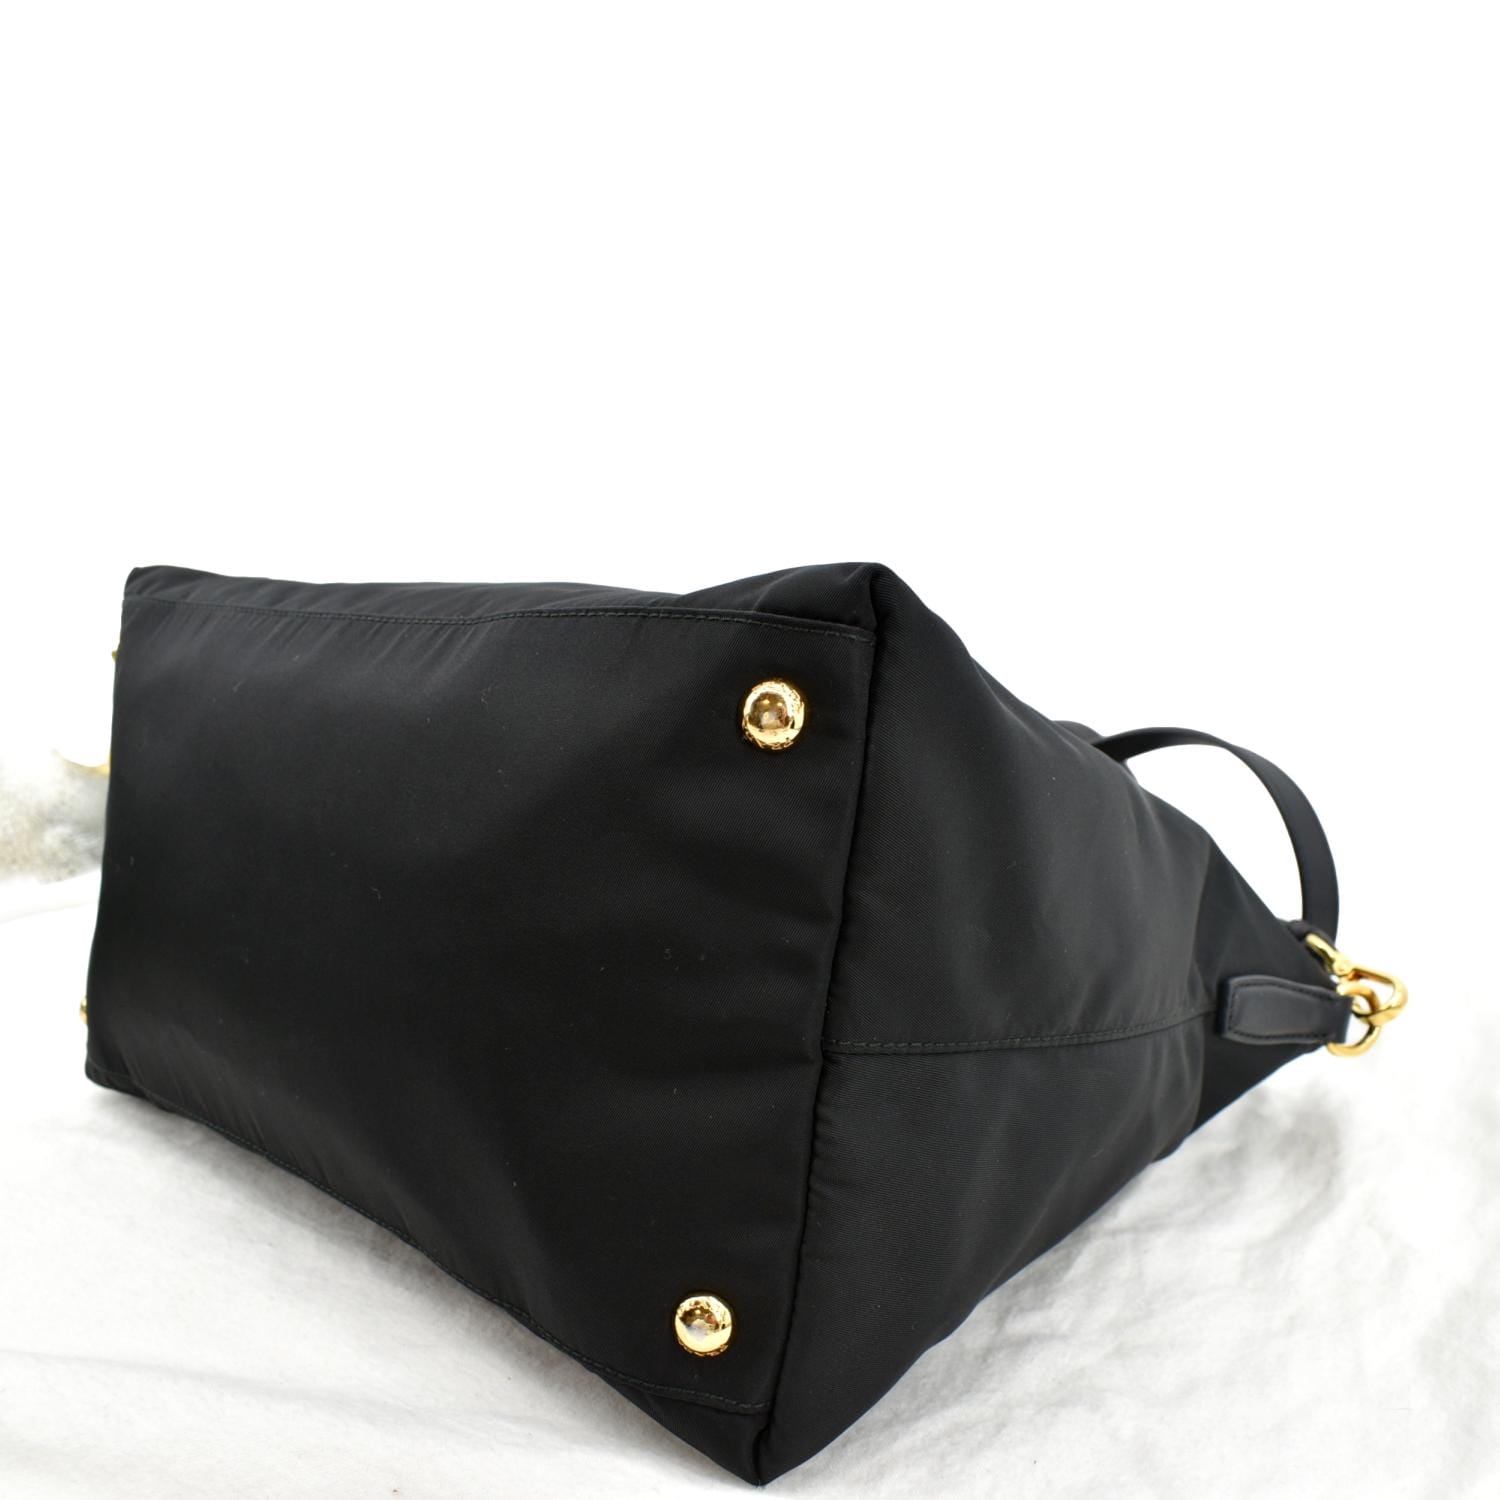 Authentic PRADA Nylon Tessuto Saffiano Black Leather Shoulder Tote Bag